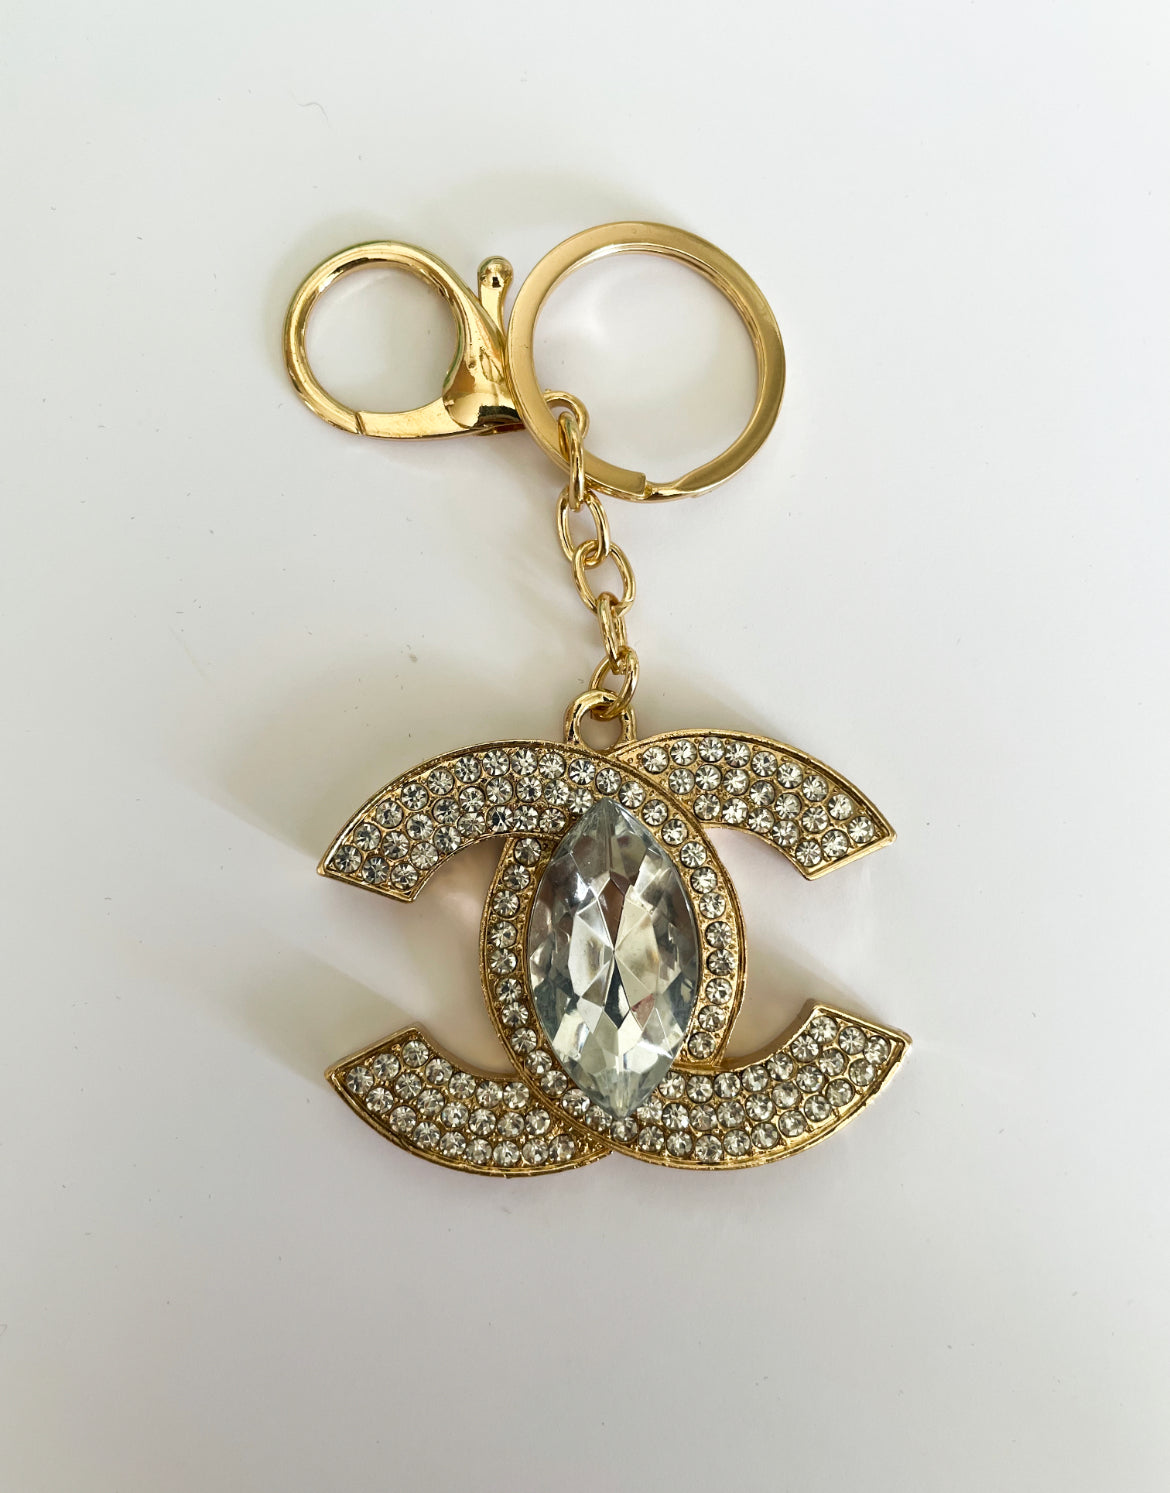 The Naila Bag Charm / Key Ring